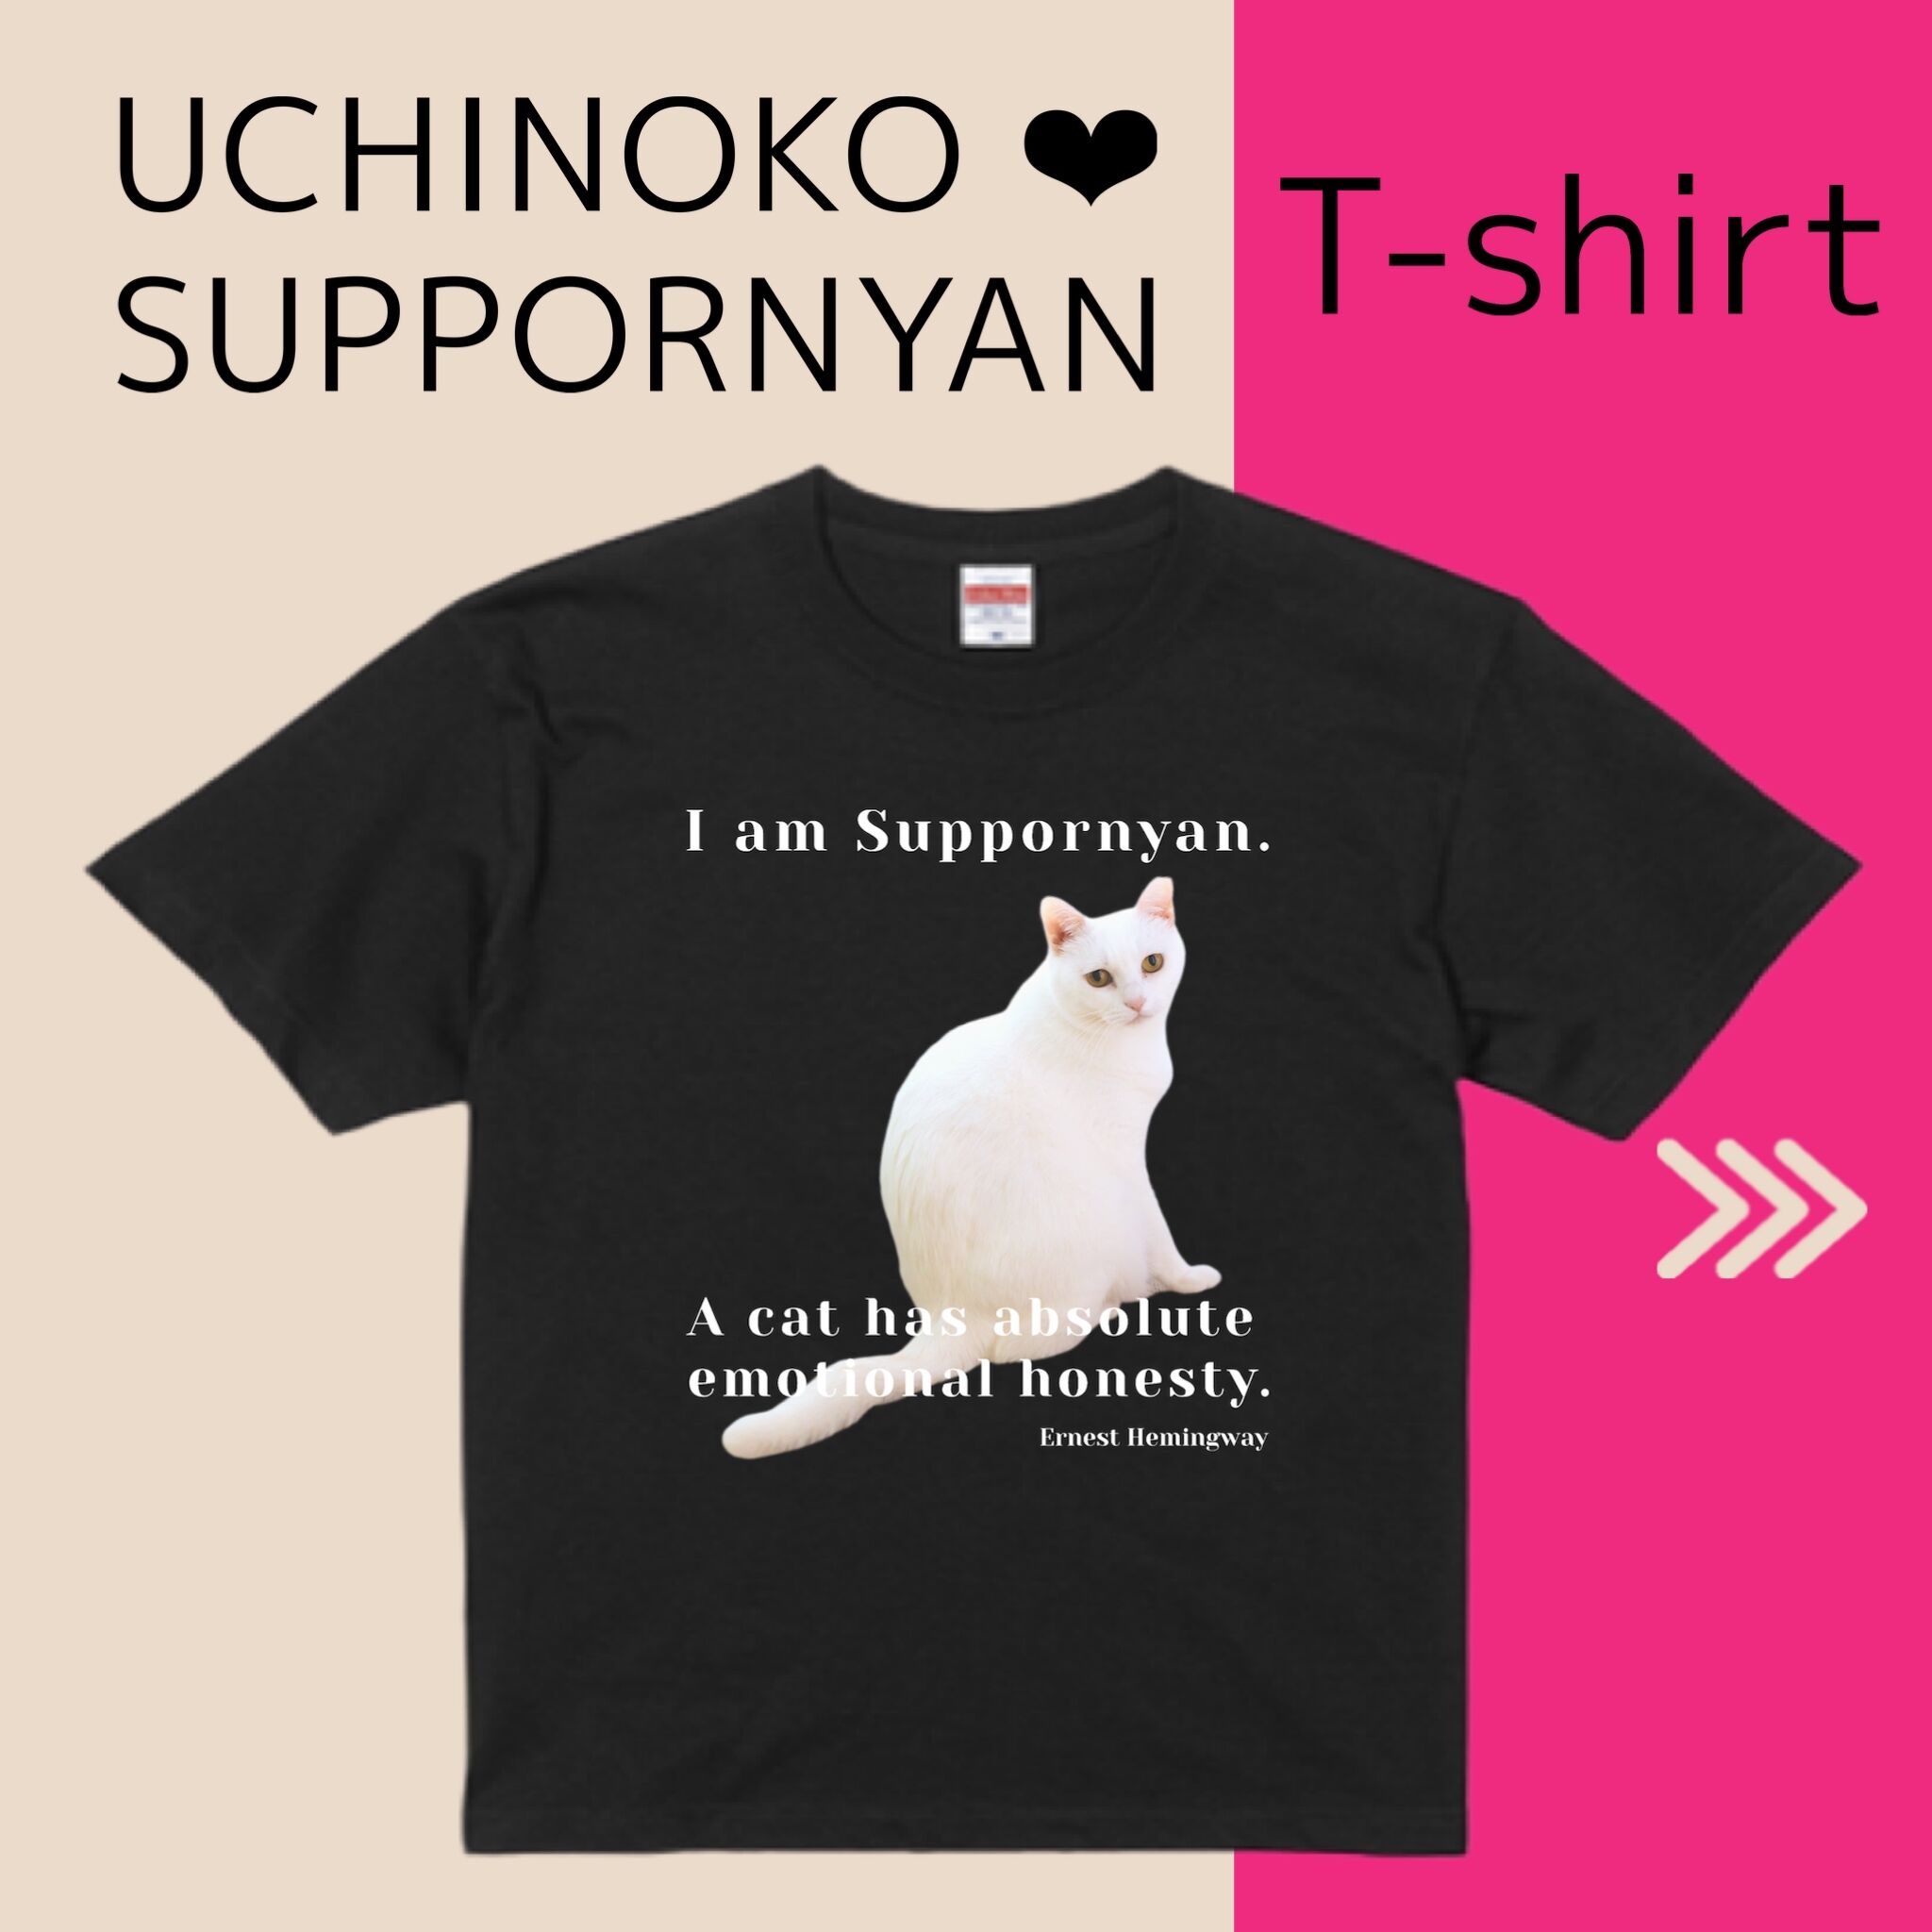 2022猫年記念企画「UCHINOKO♡SUPPORNYAN T-shirt」 発売決定!! | NEWSCAST